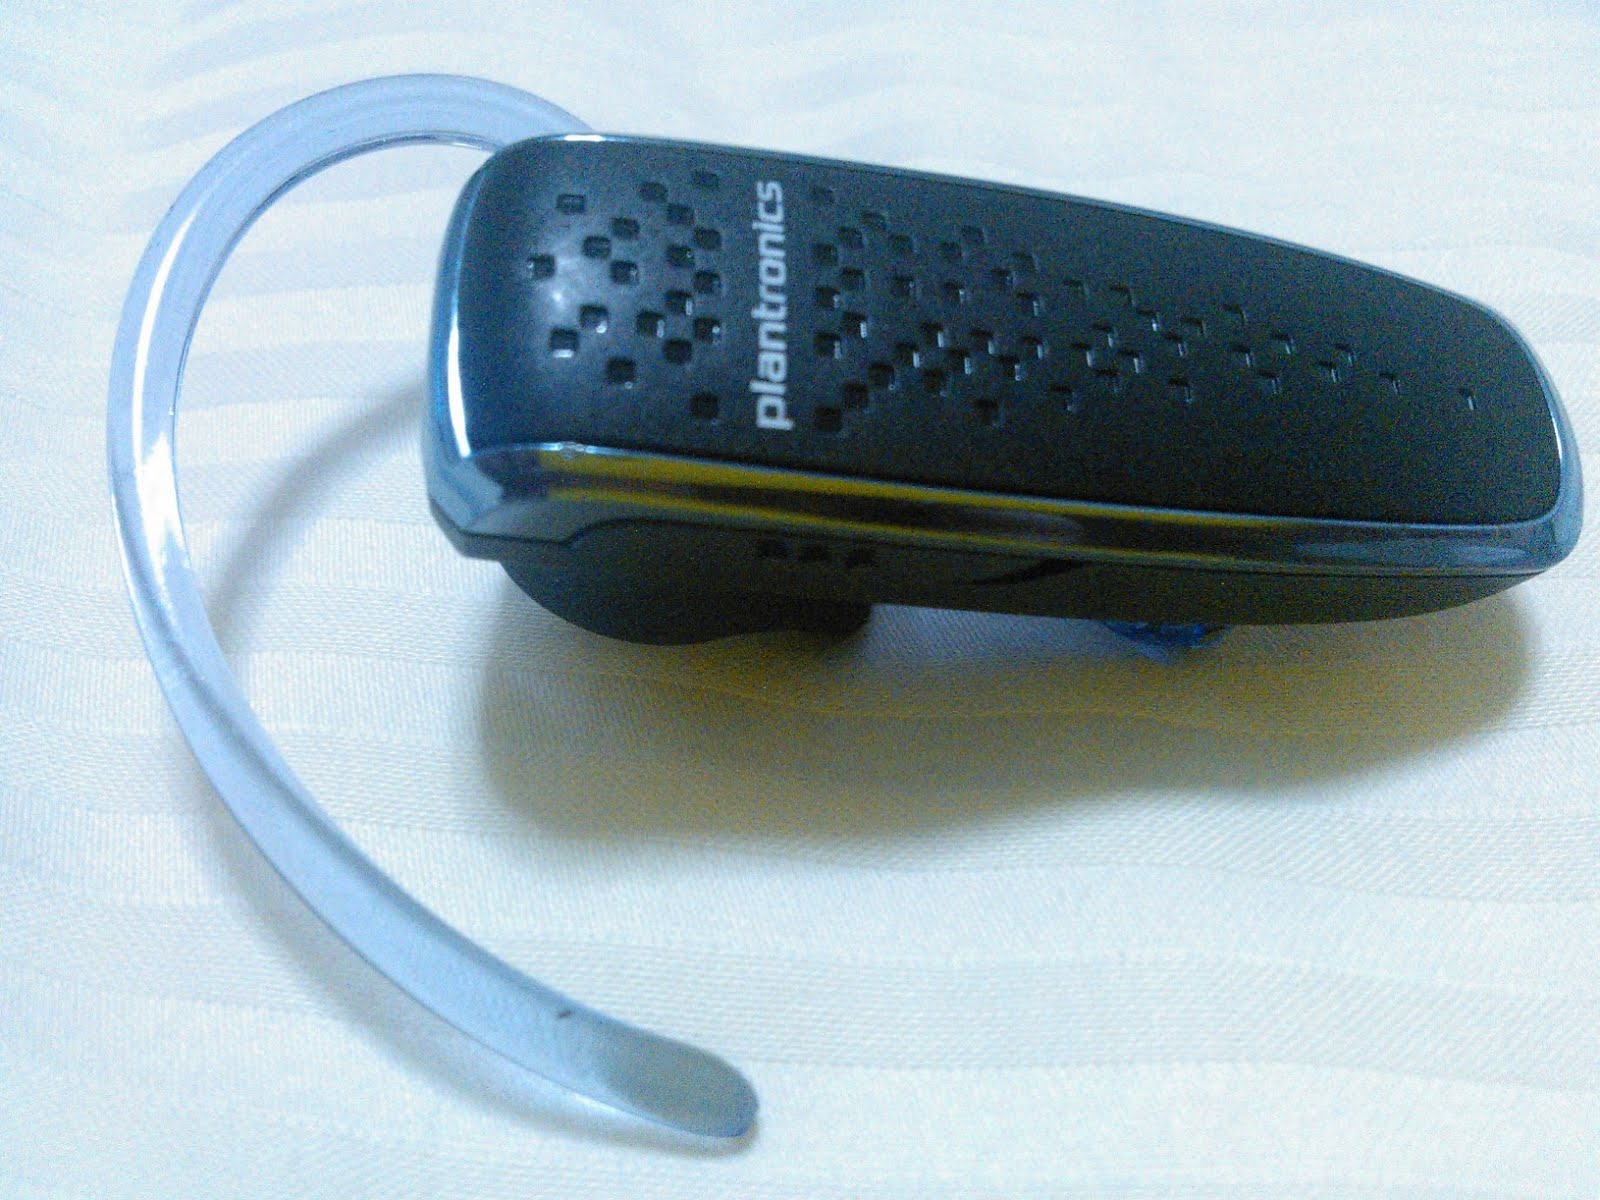 Review: Plantronics M50 Bluetooth headset